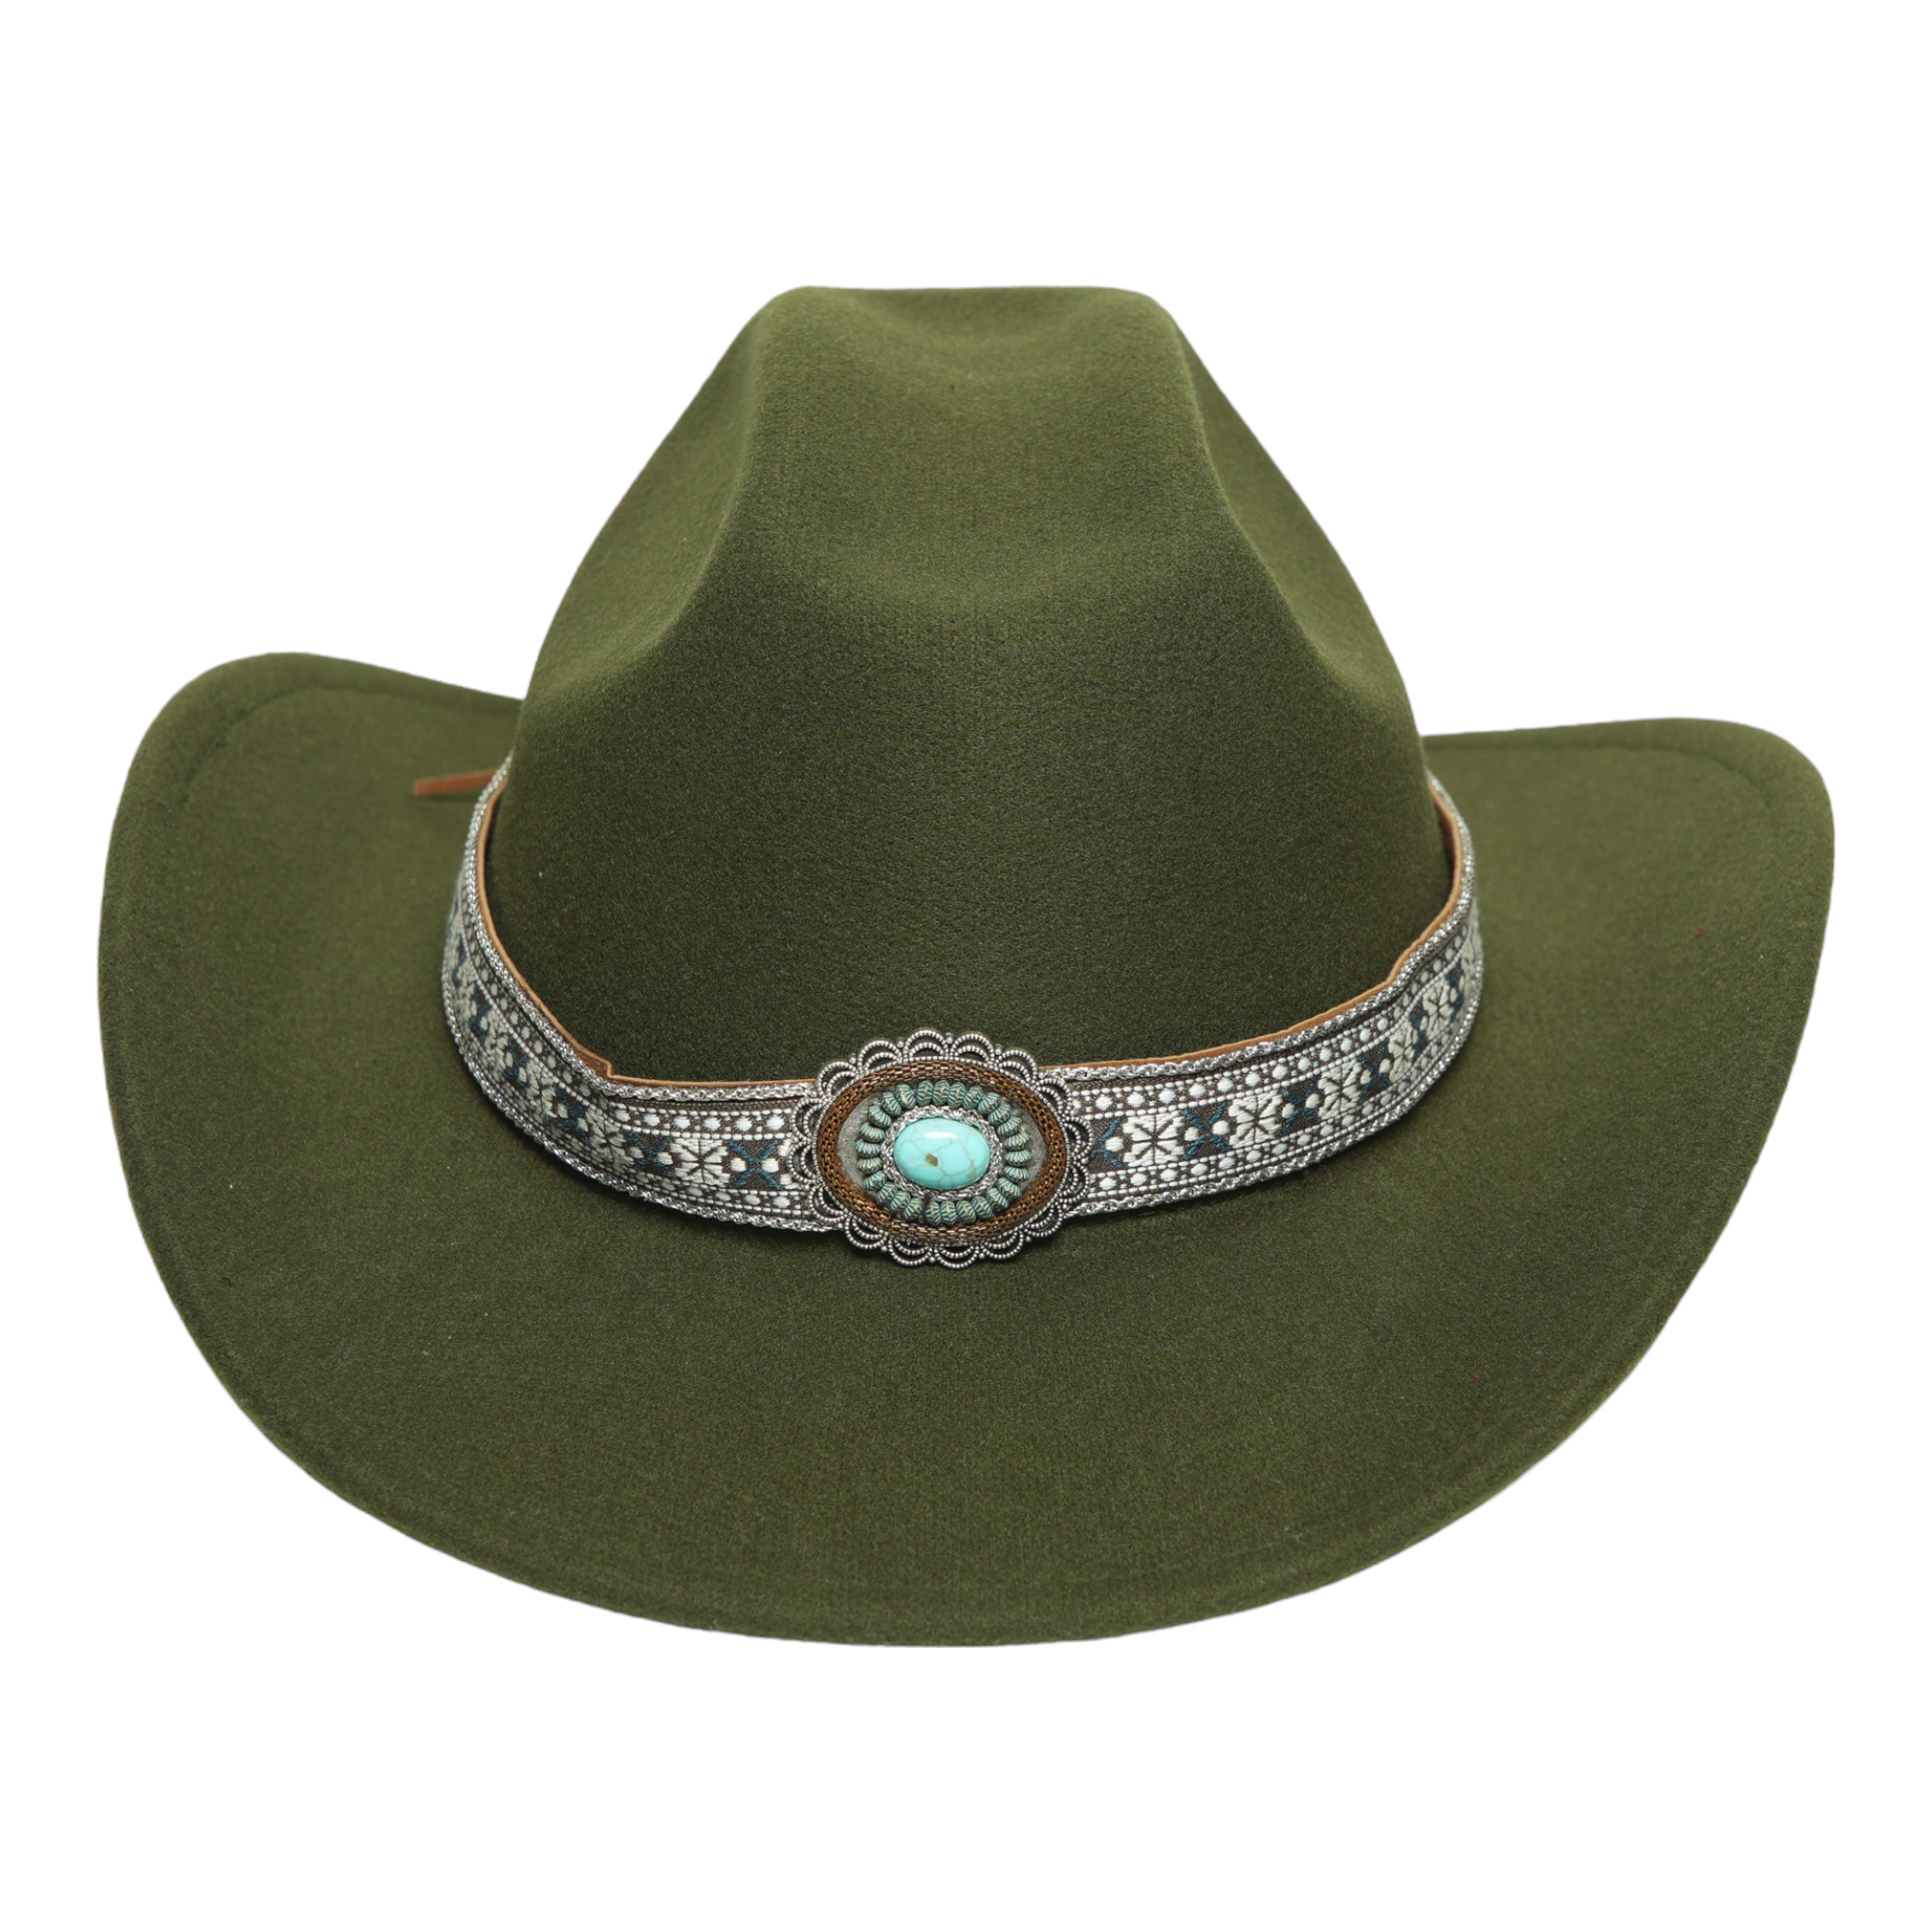 Chokore Ethnic Tibetan Cowboy Hat (Forest Green)